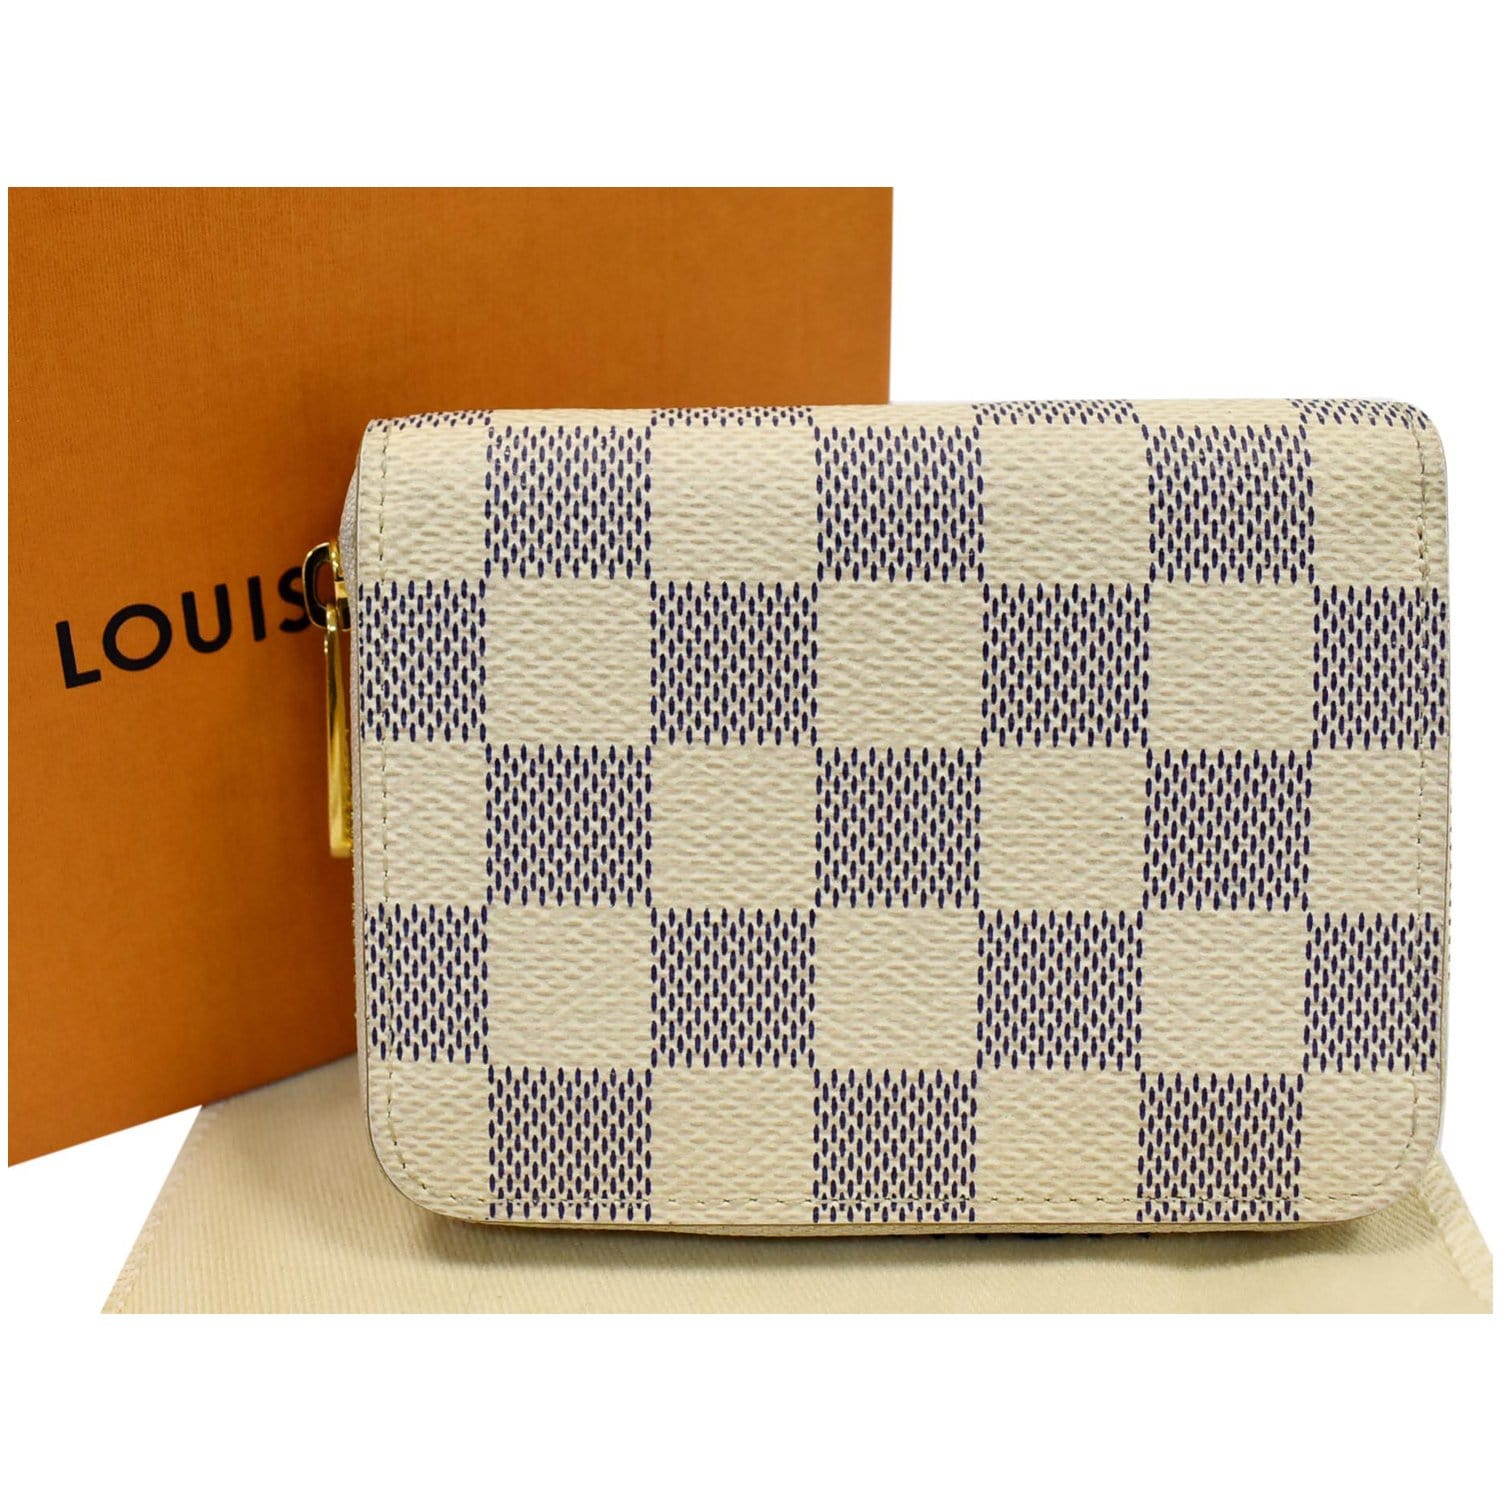 Louis-Vuitton-Damier-Azur-White-Checkered-Purse-Suede-Top-1 - Dash